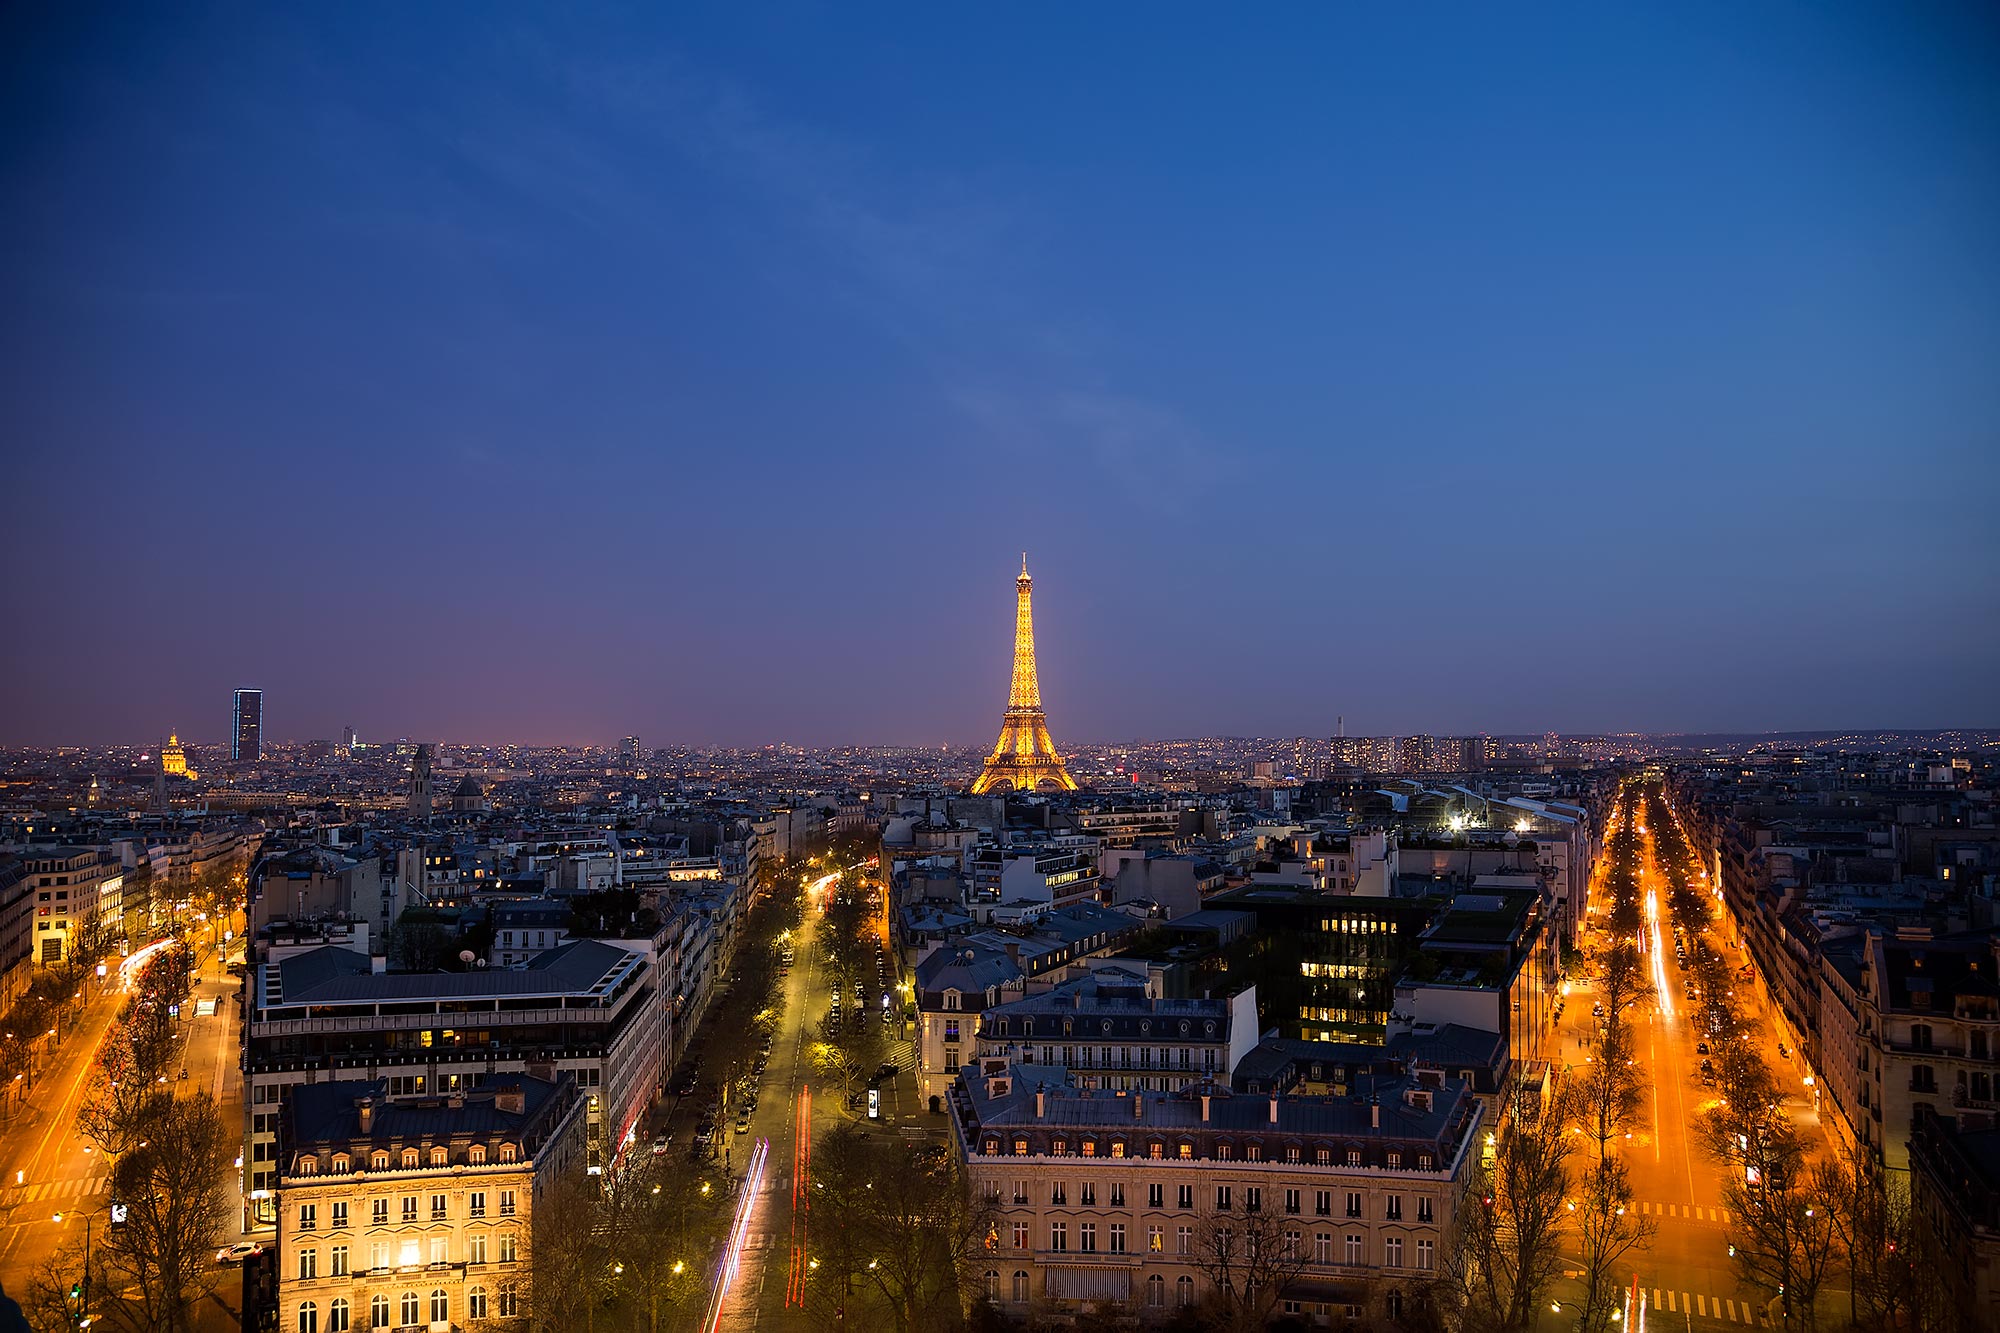 The Eiffel Tower in Paris, France. © Ulli Maier & Nisa Maier